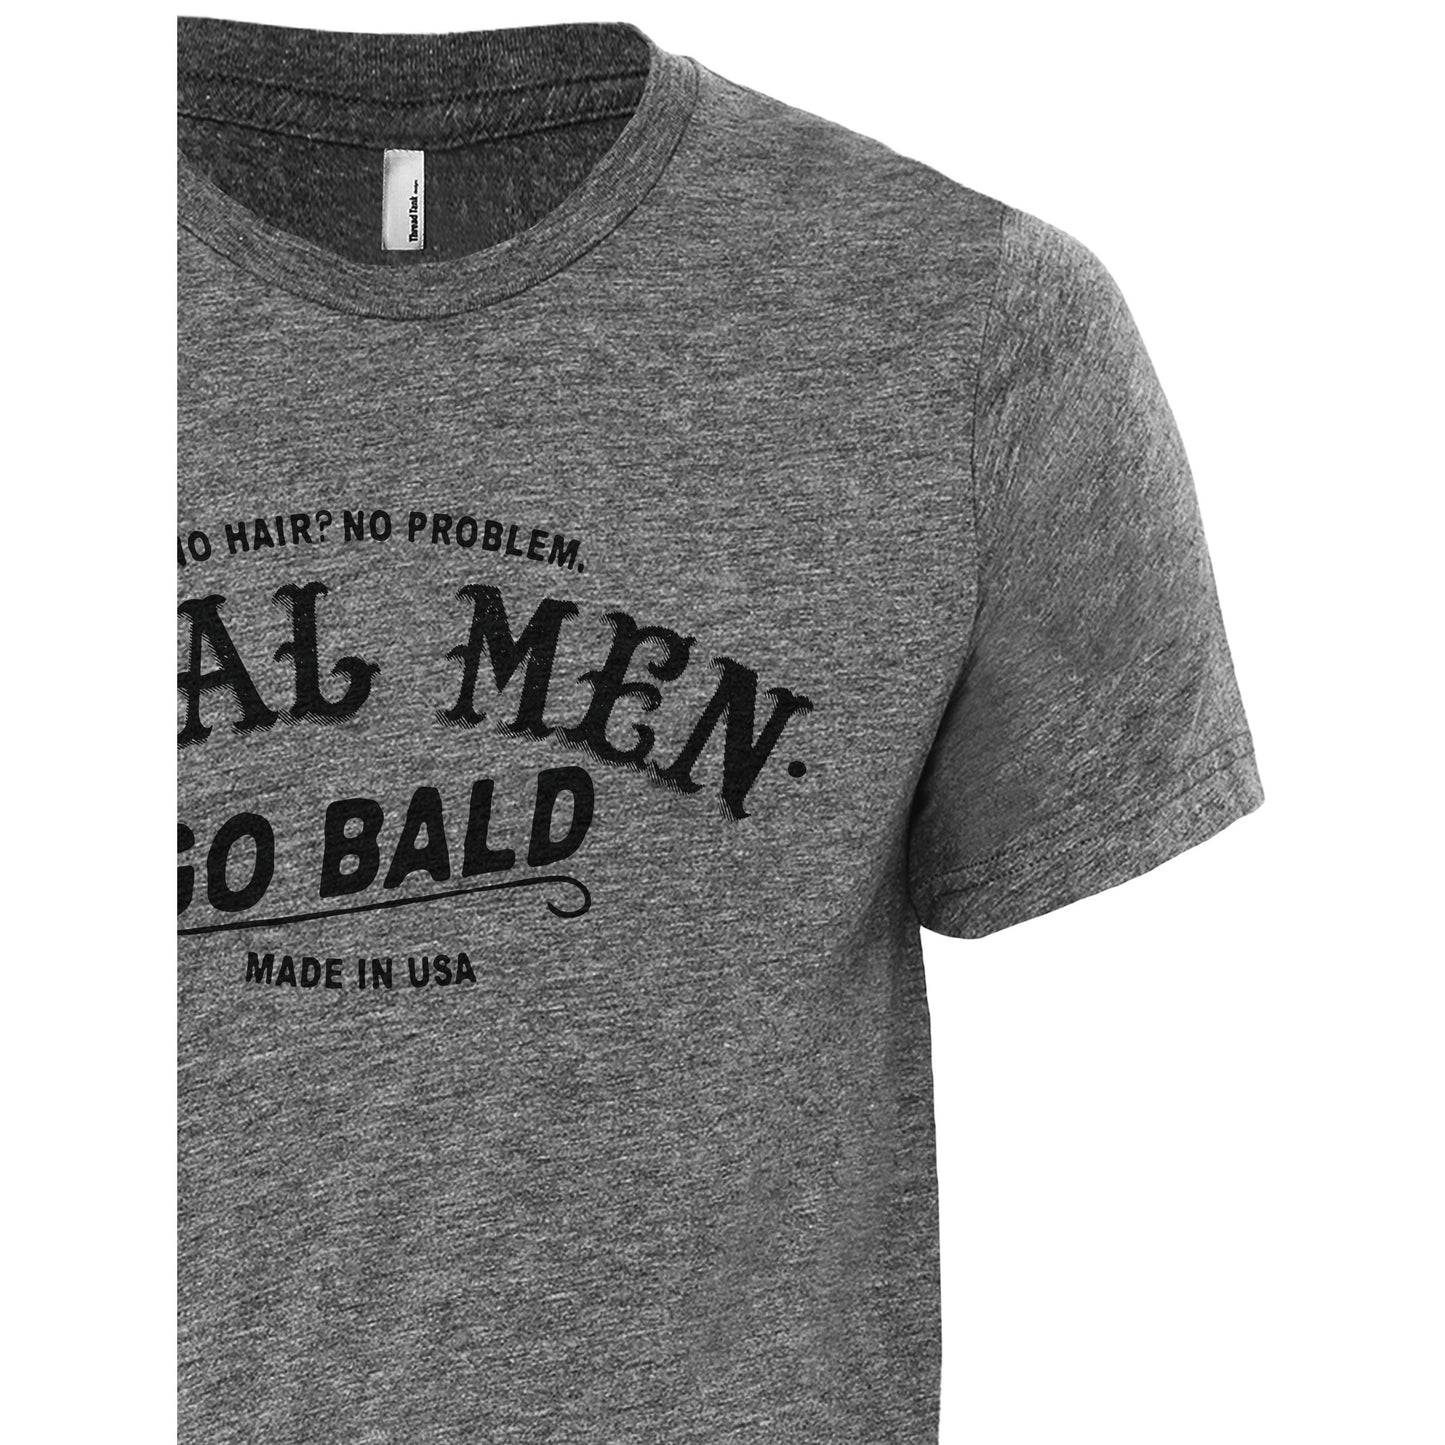 Real Men Go Bald Heather Grey Printed Graphic Men's Crew T-Shirt Tee Side View